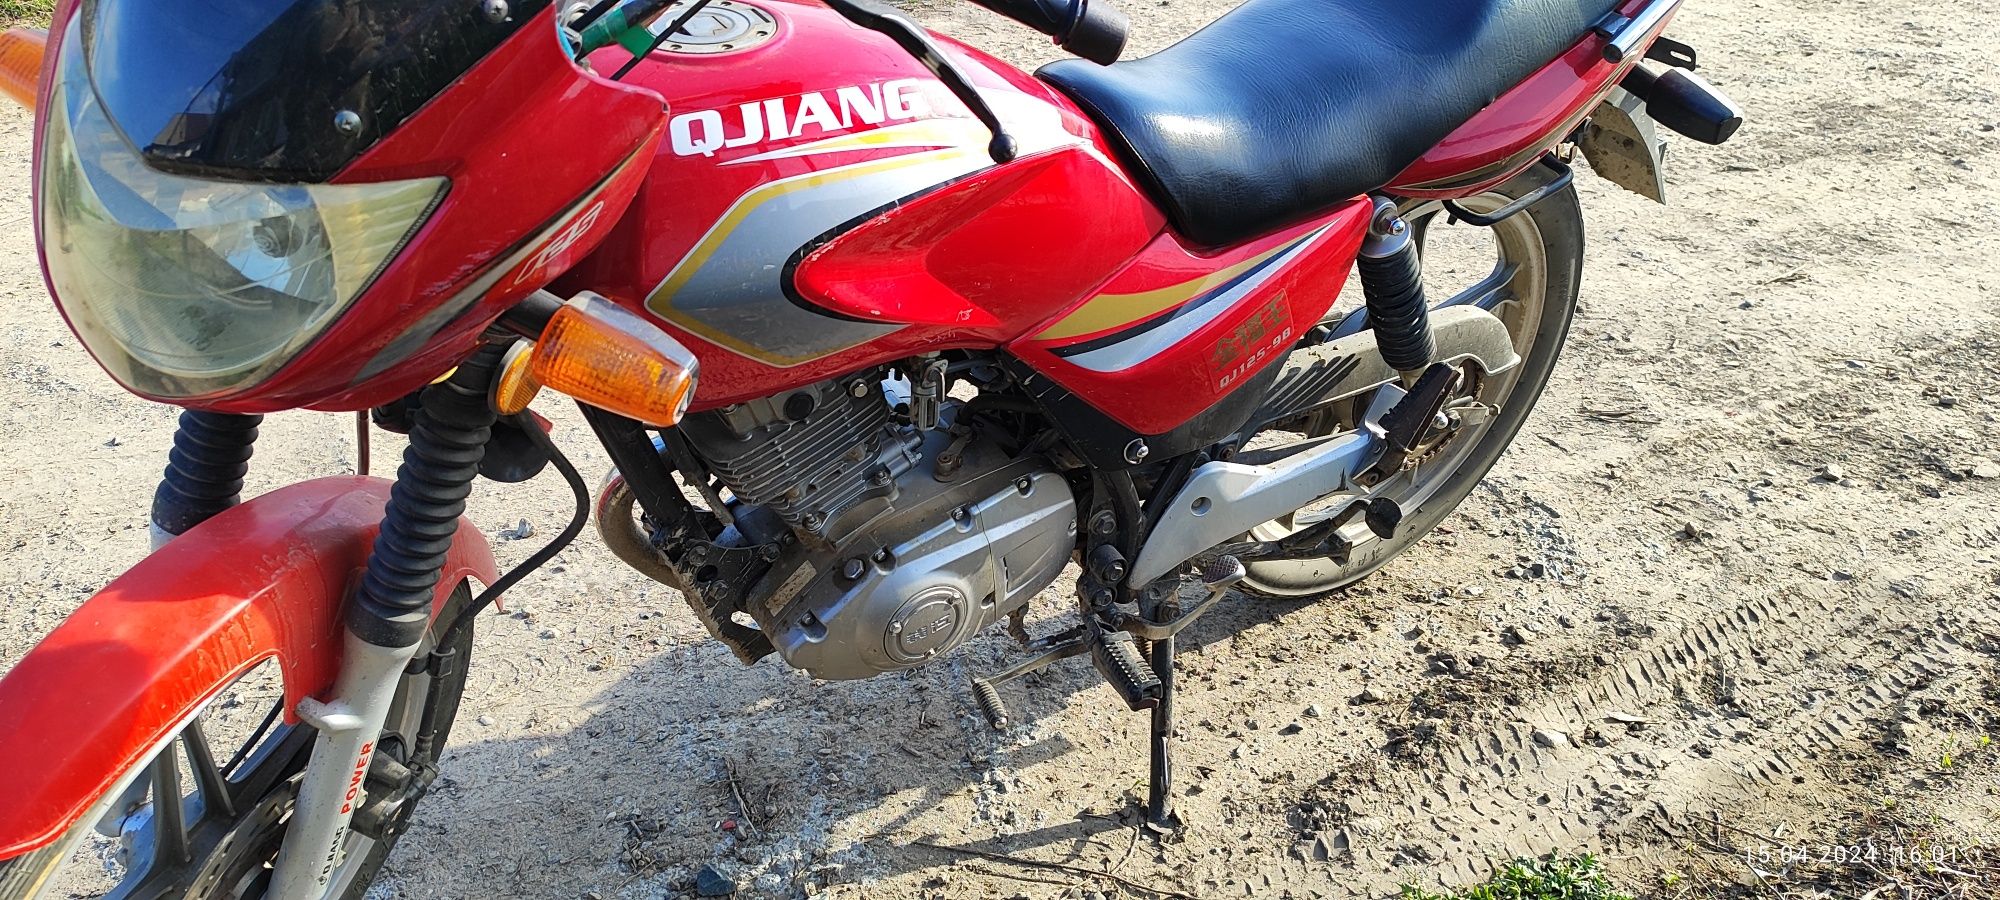 Продам мотоцикл q-jang